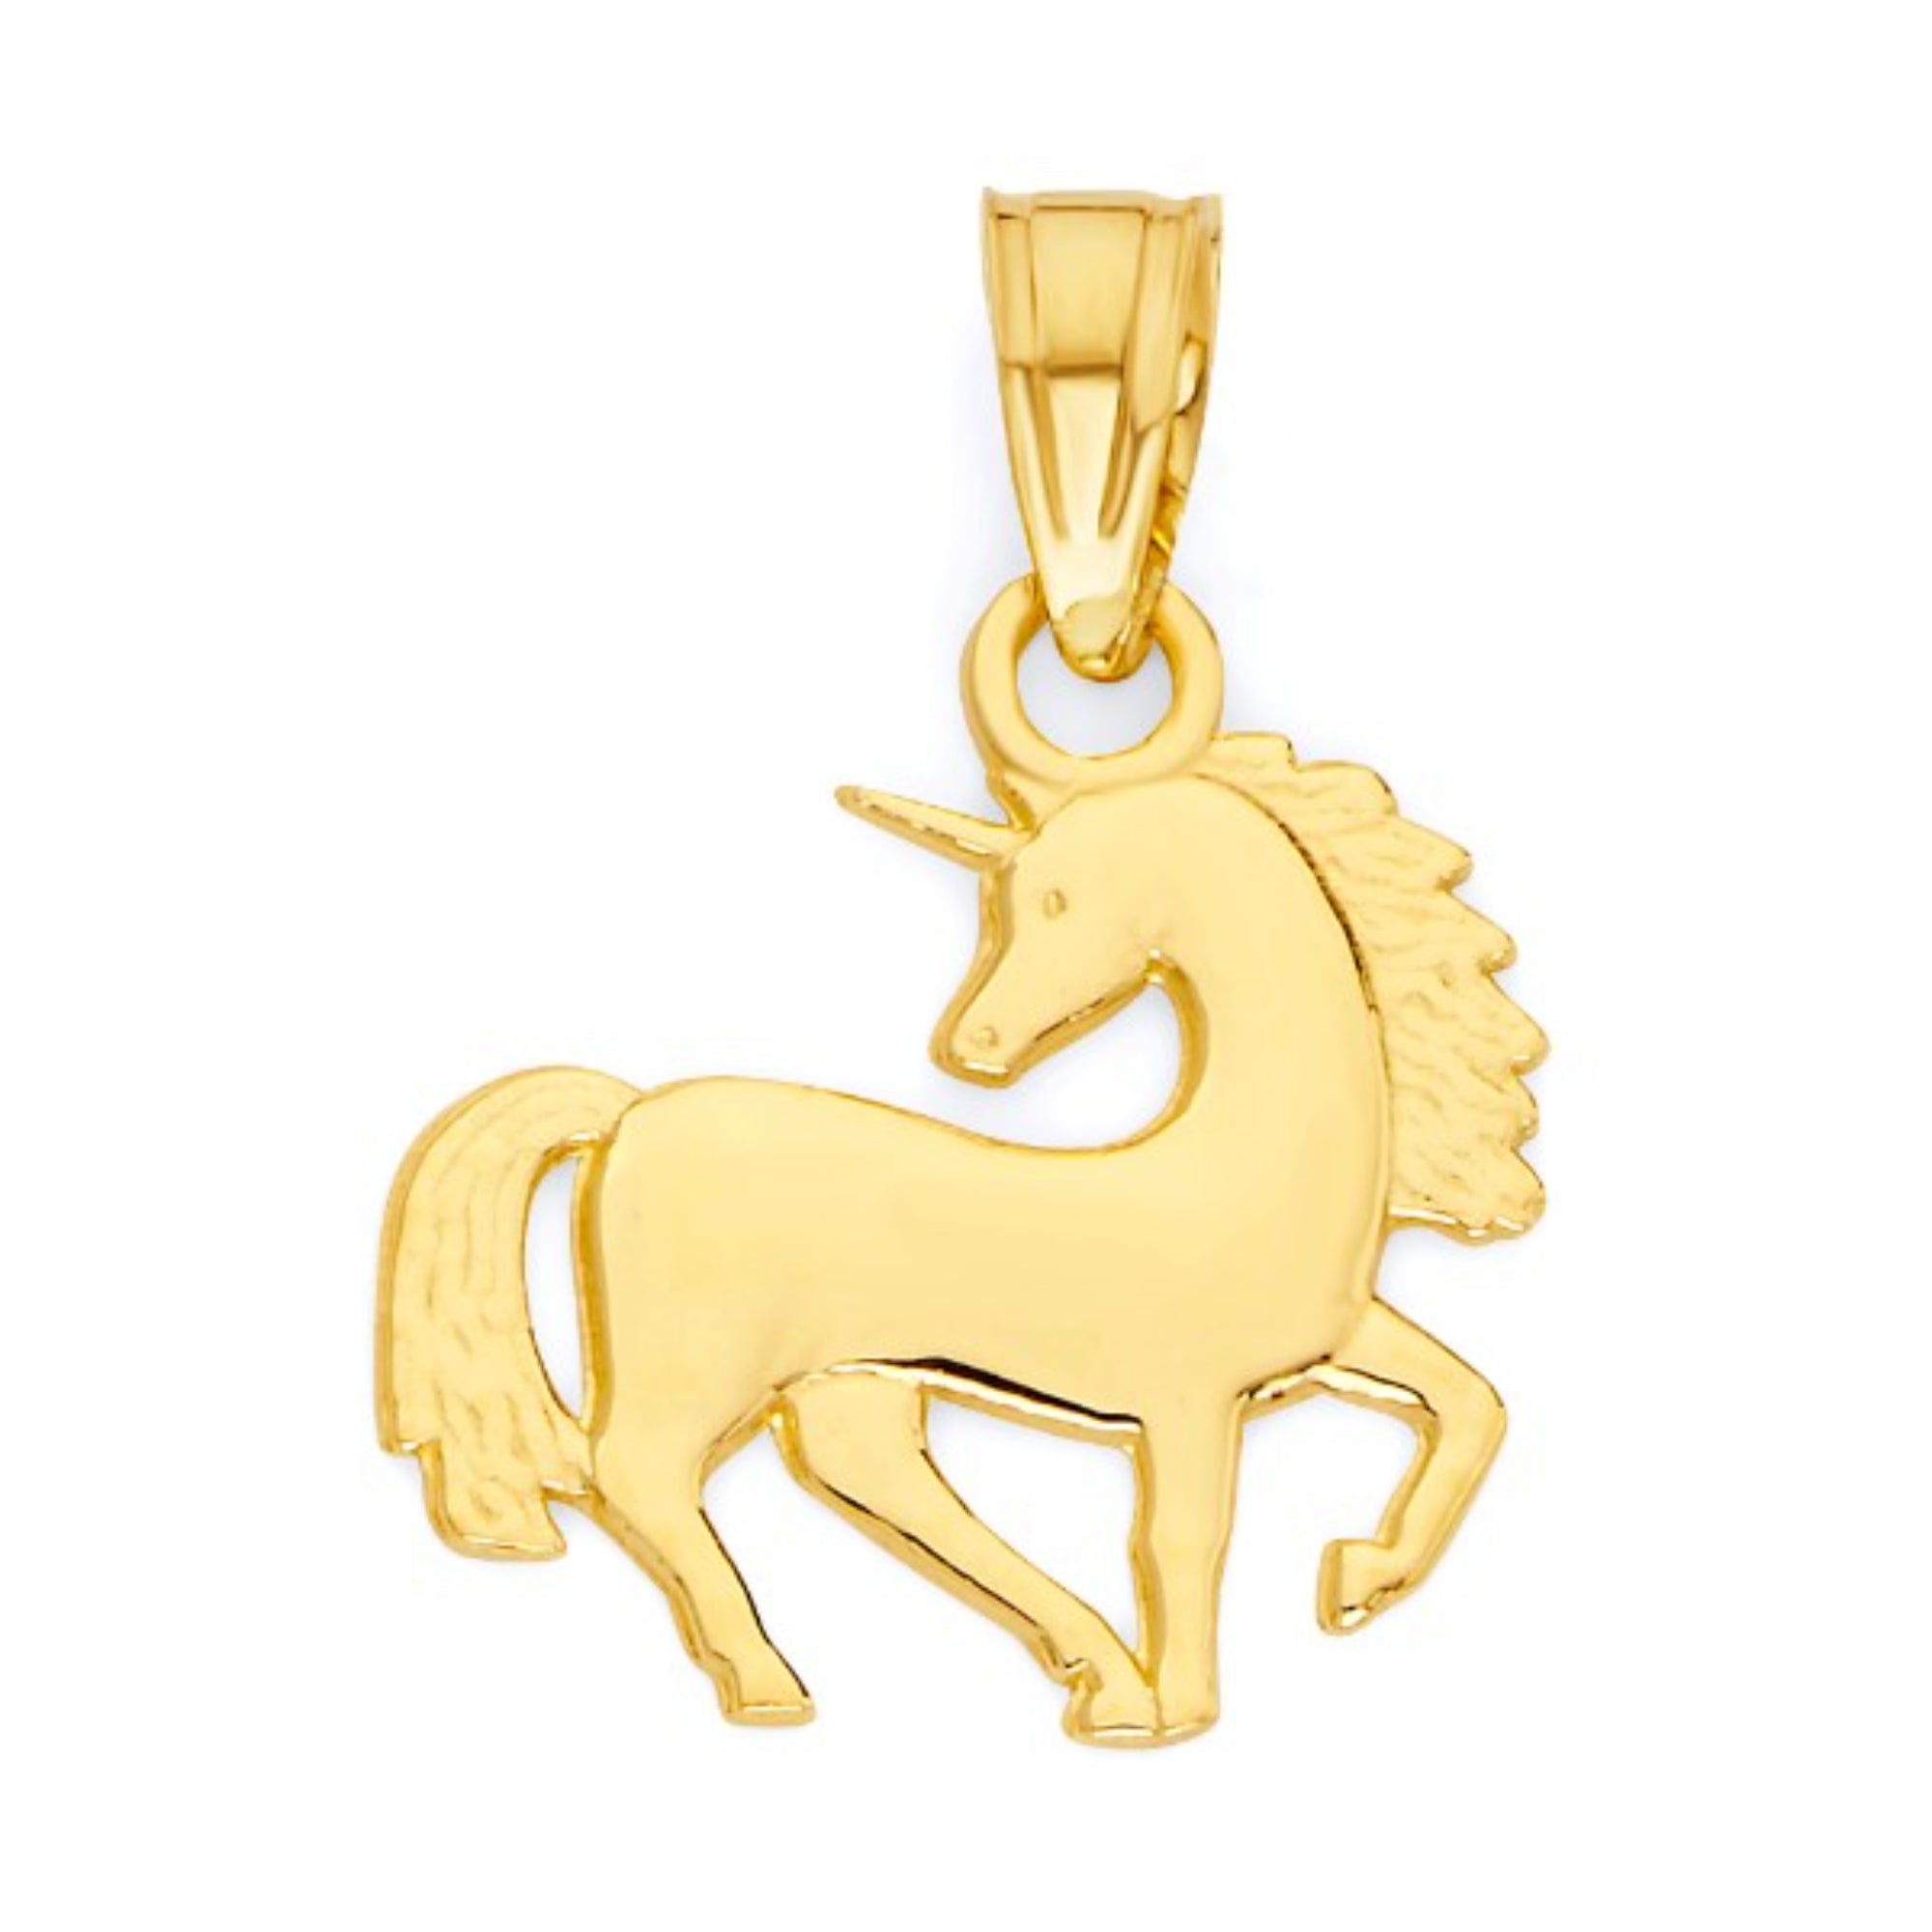 Solid Gold Unicorn Pendant - 10k or 14k